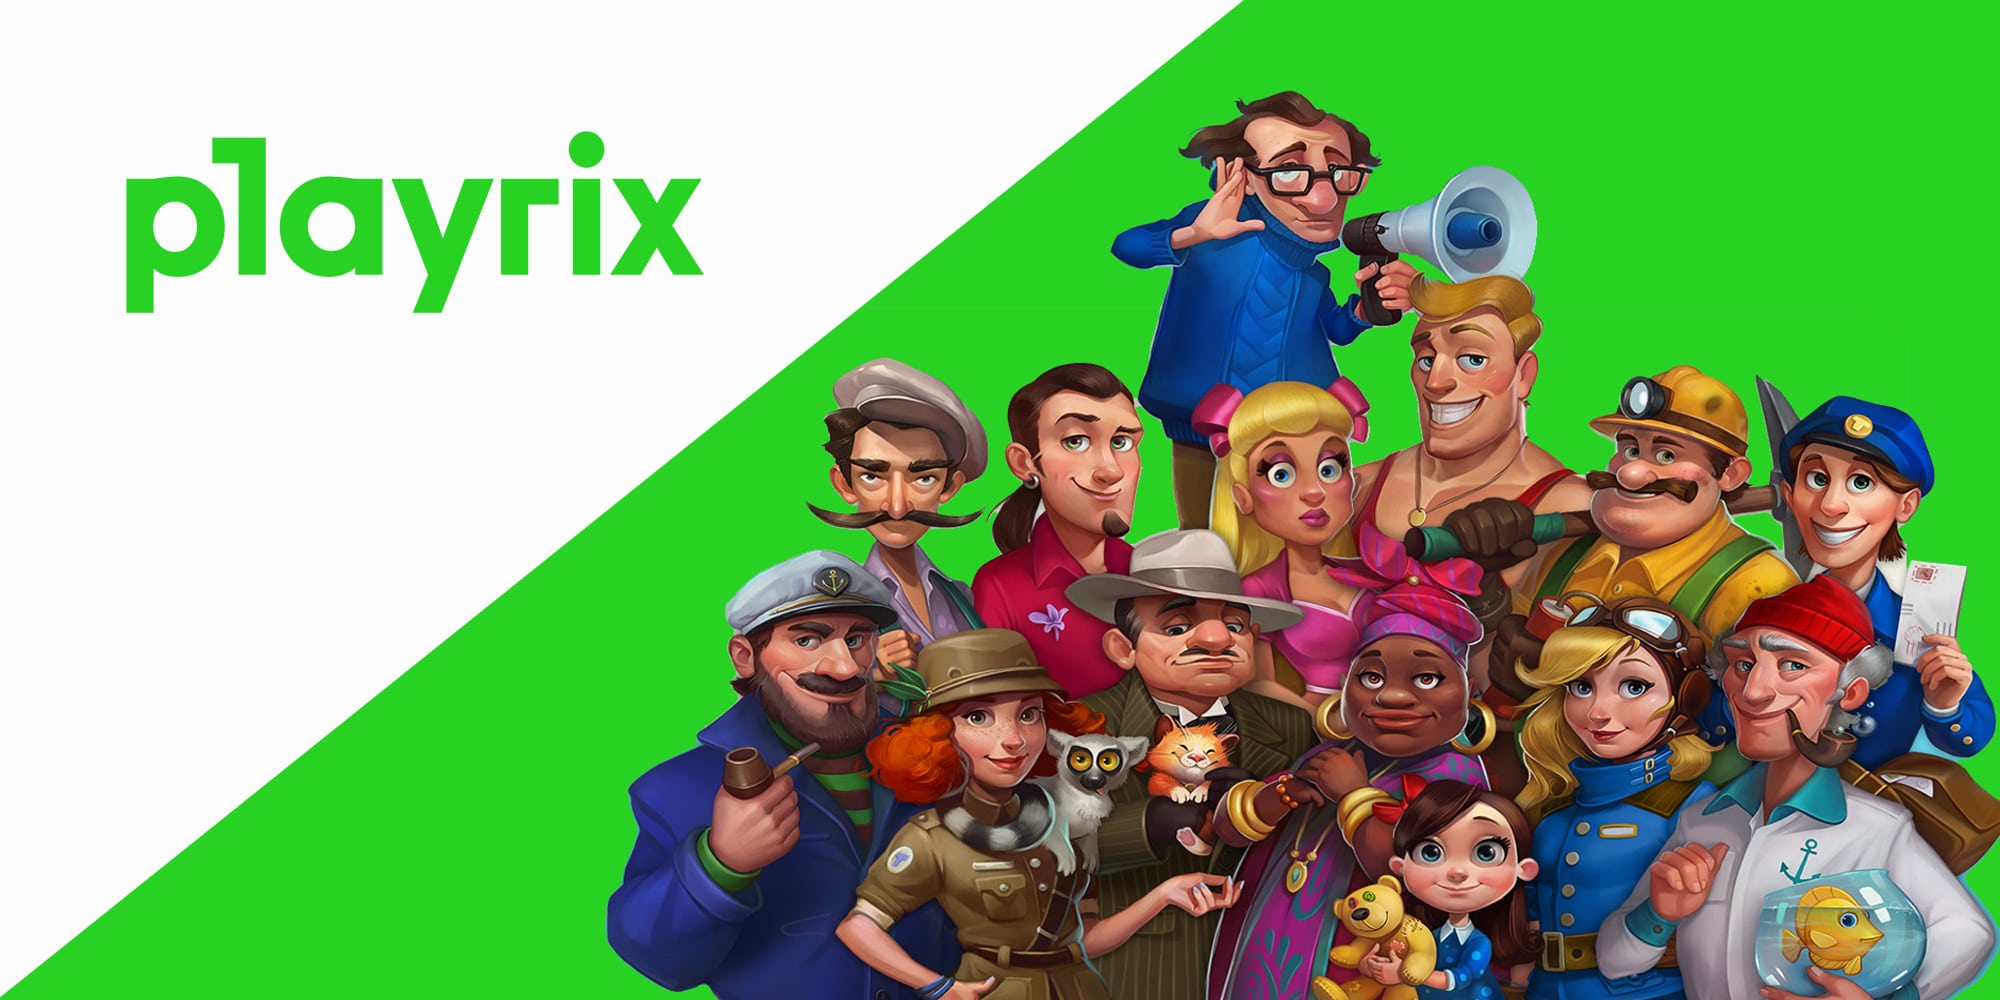 Playrix Revenue Hit $20.4 Million per week